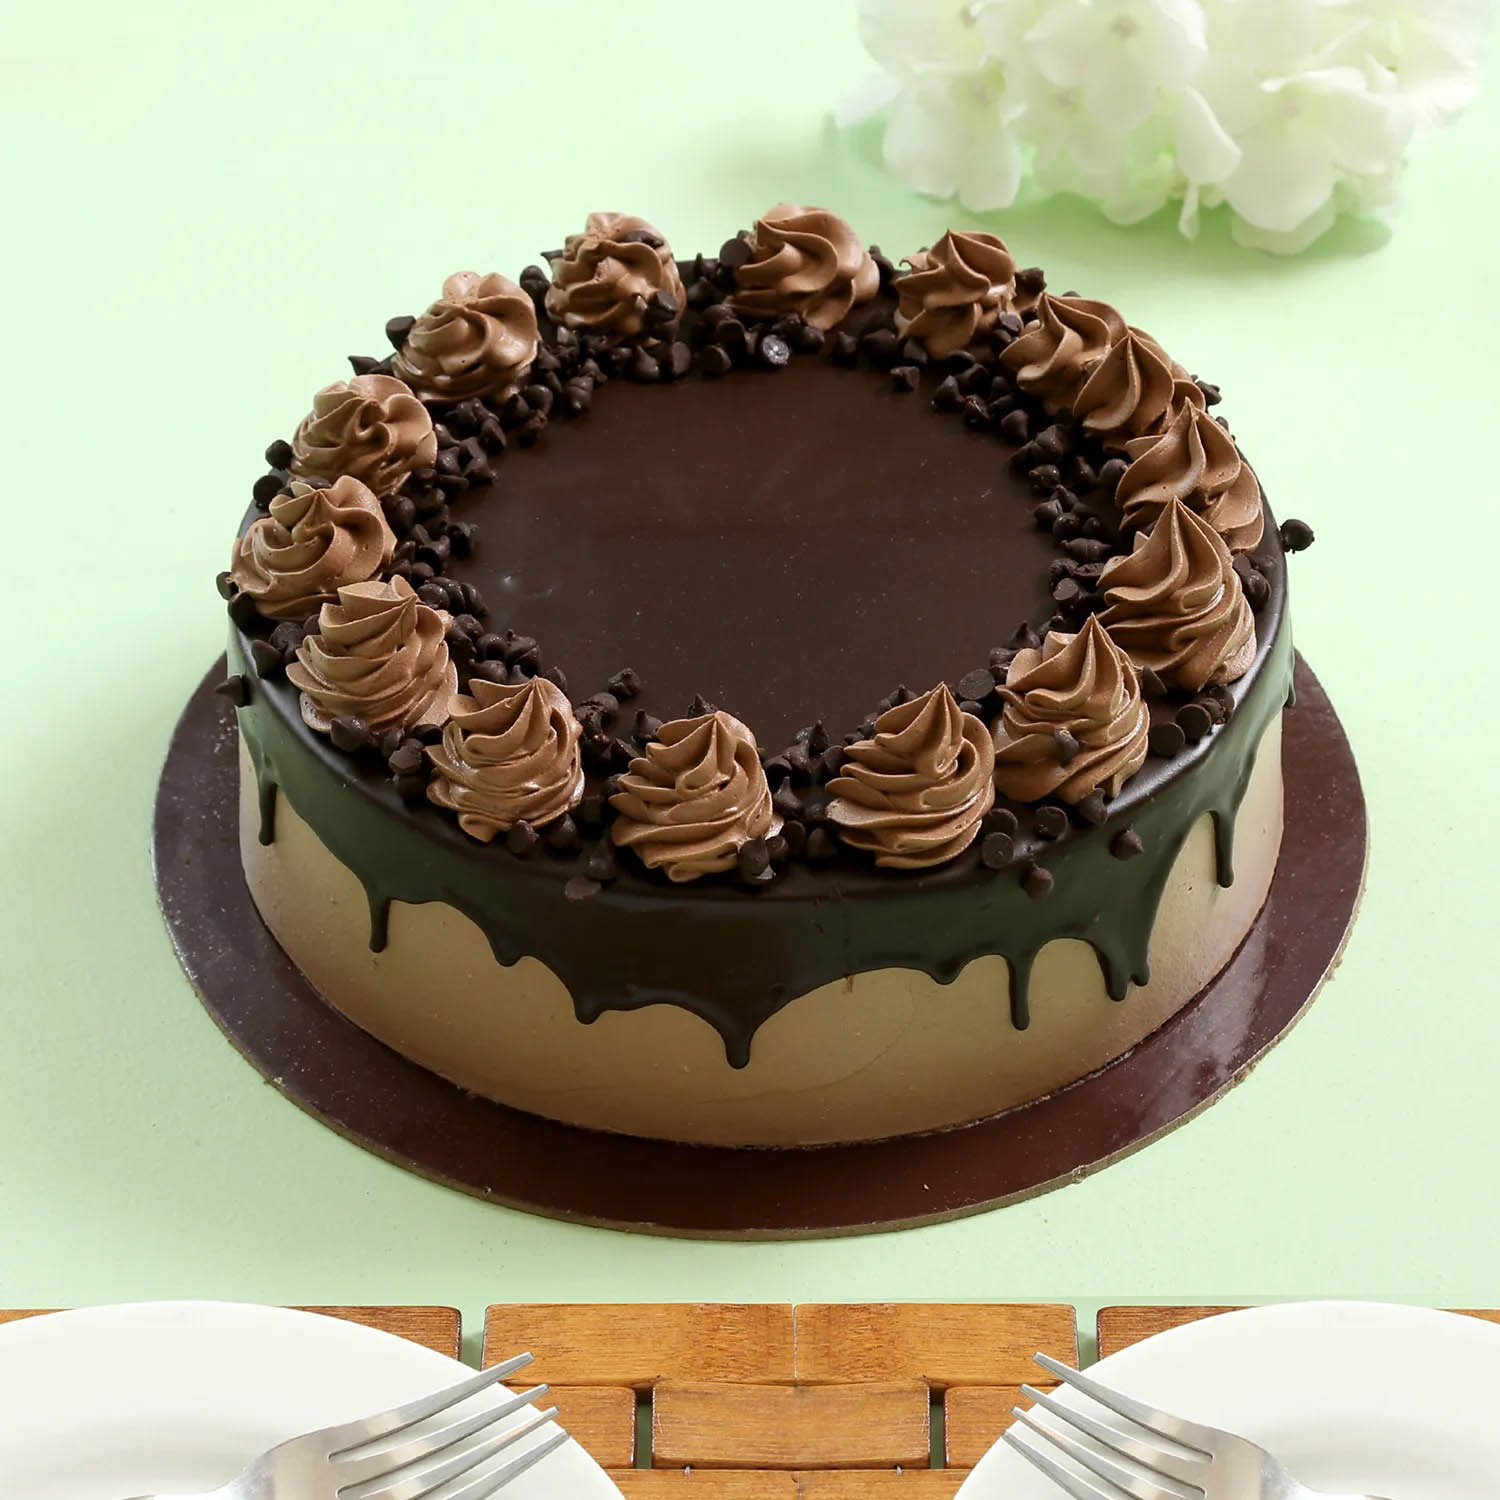 Cream Chocolate Frosting Cake